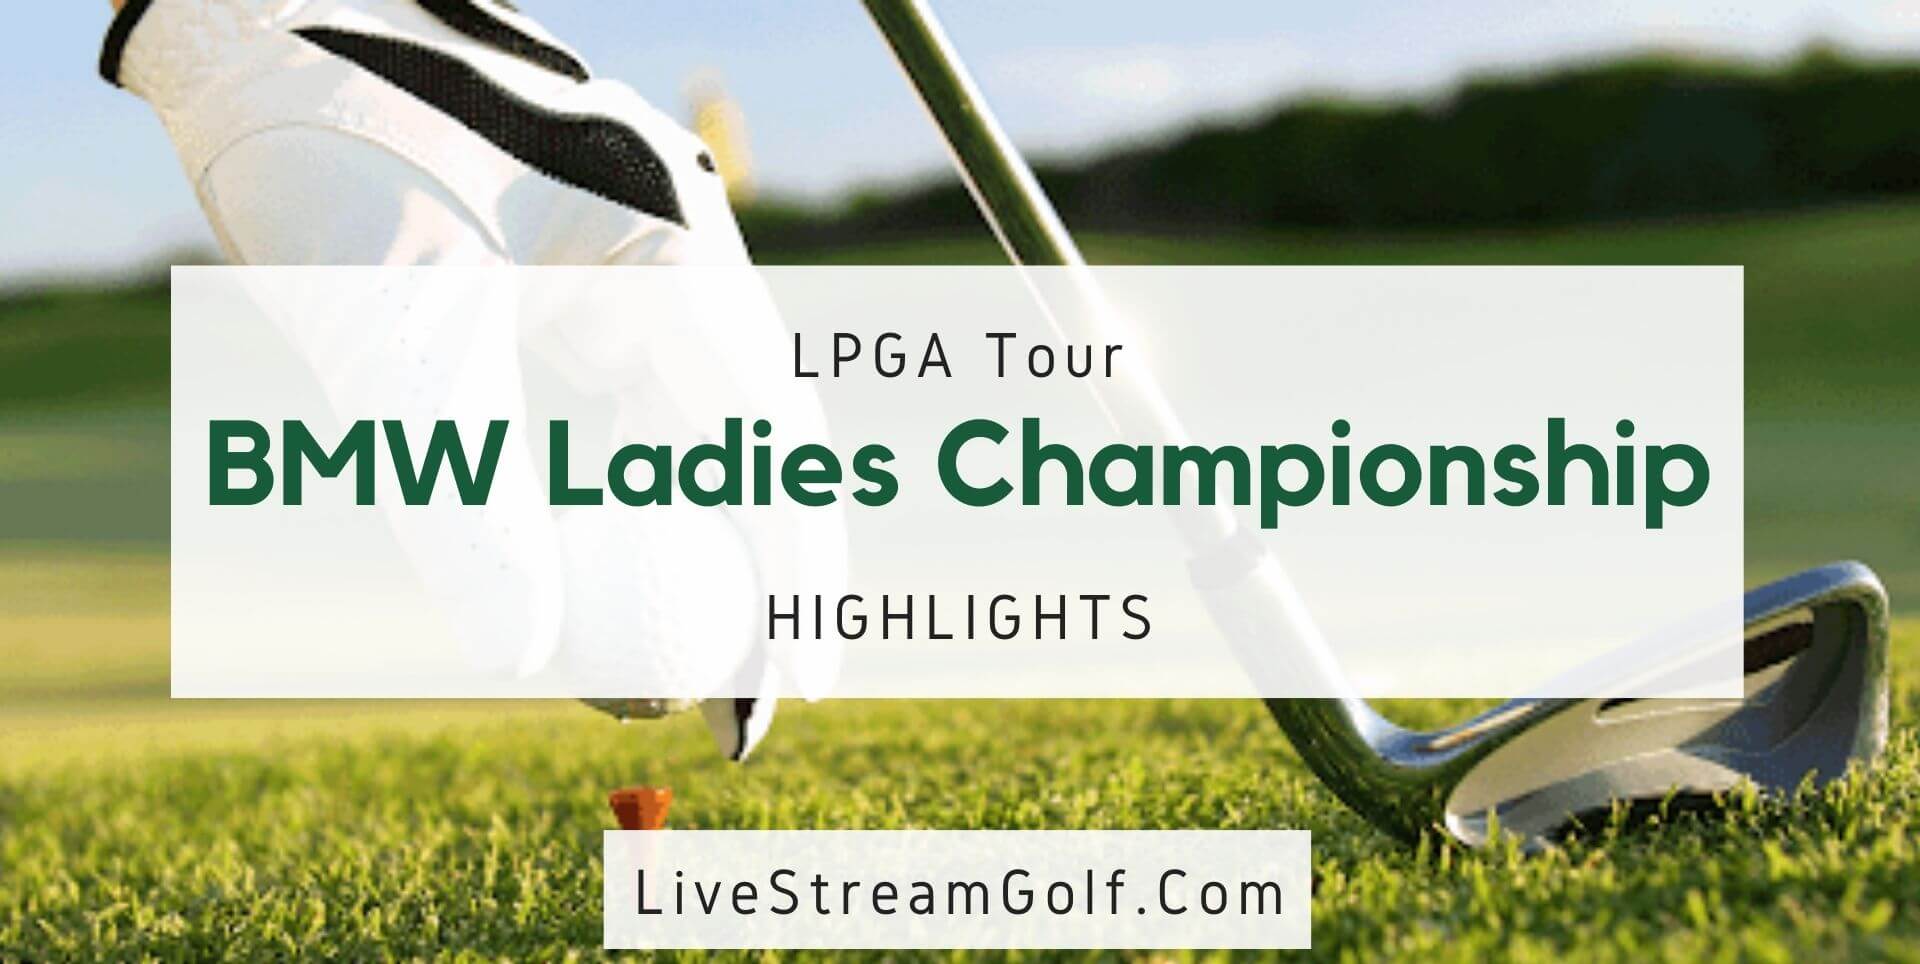 BMW Ladies Championship Rd 2 Highlights LPGA Tour 2021